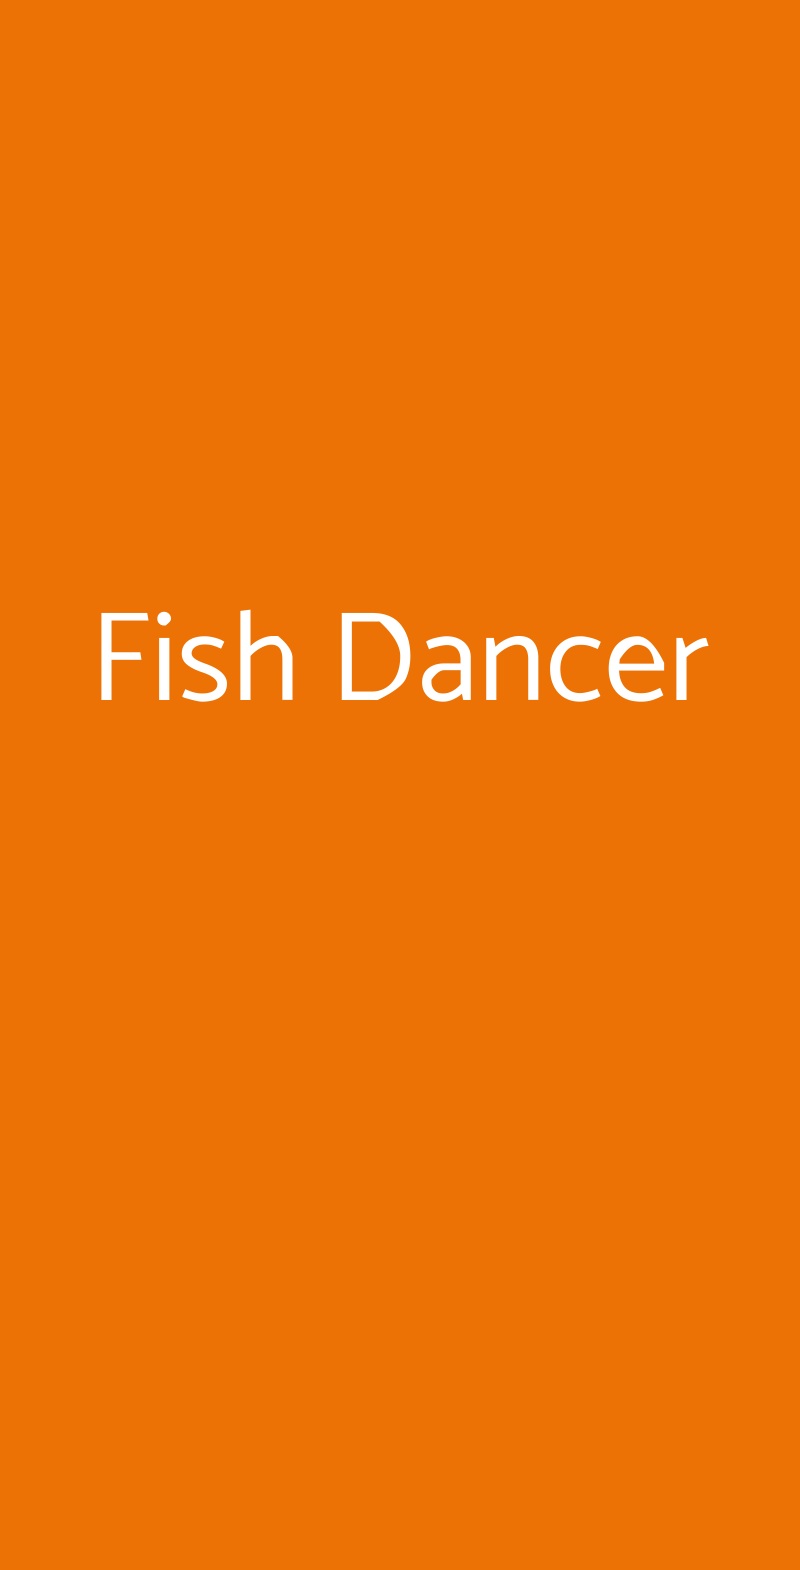 Fish Dancer Milano menù 1 pagina